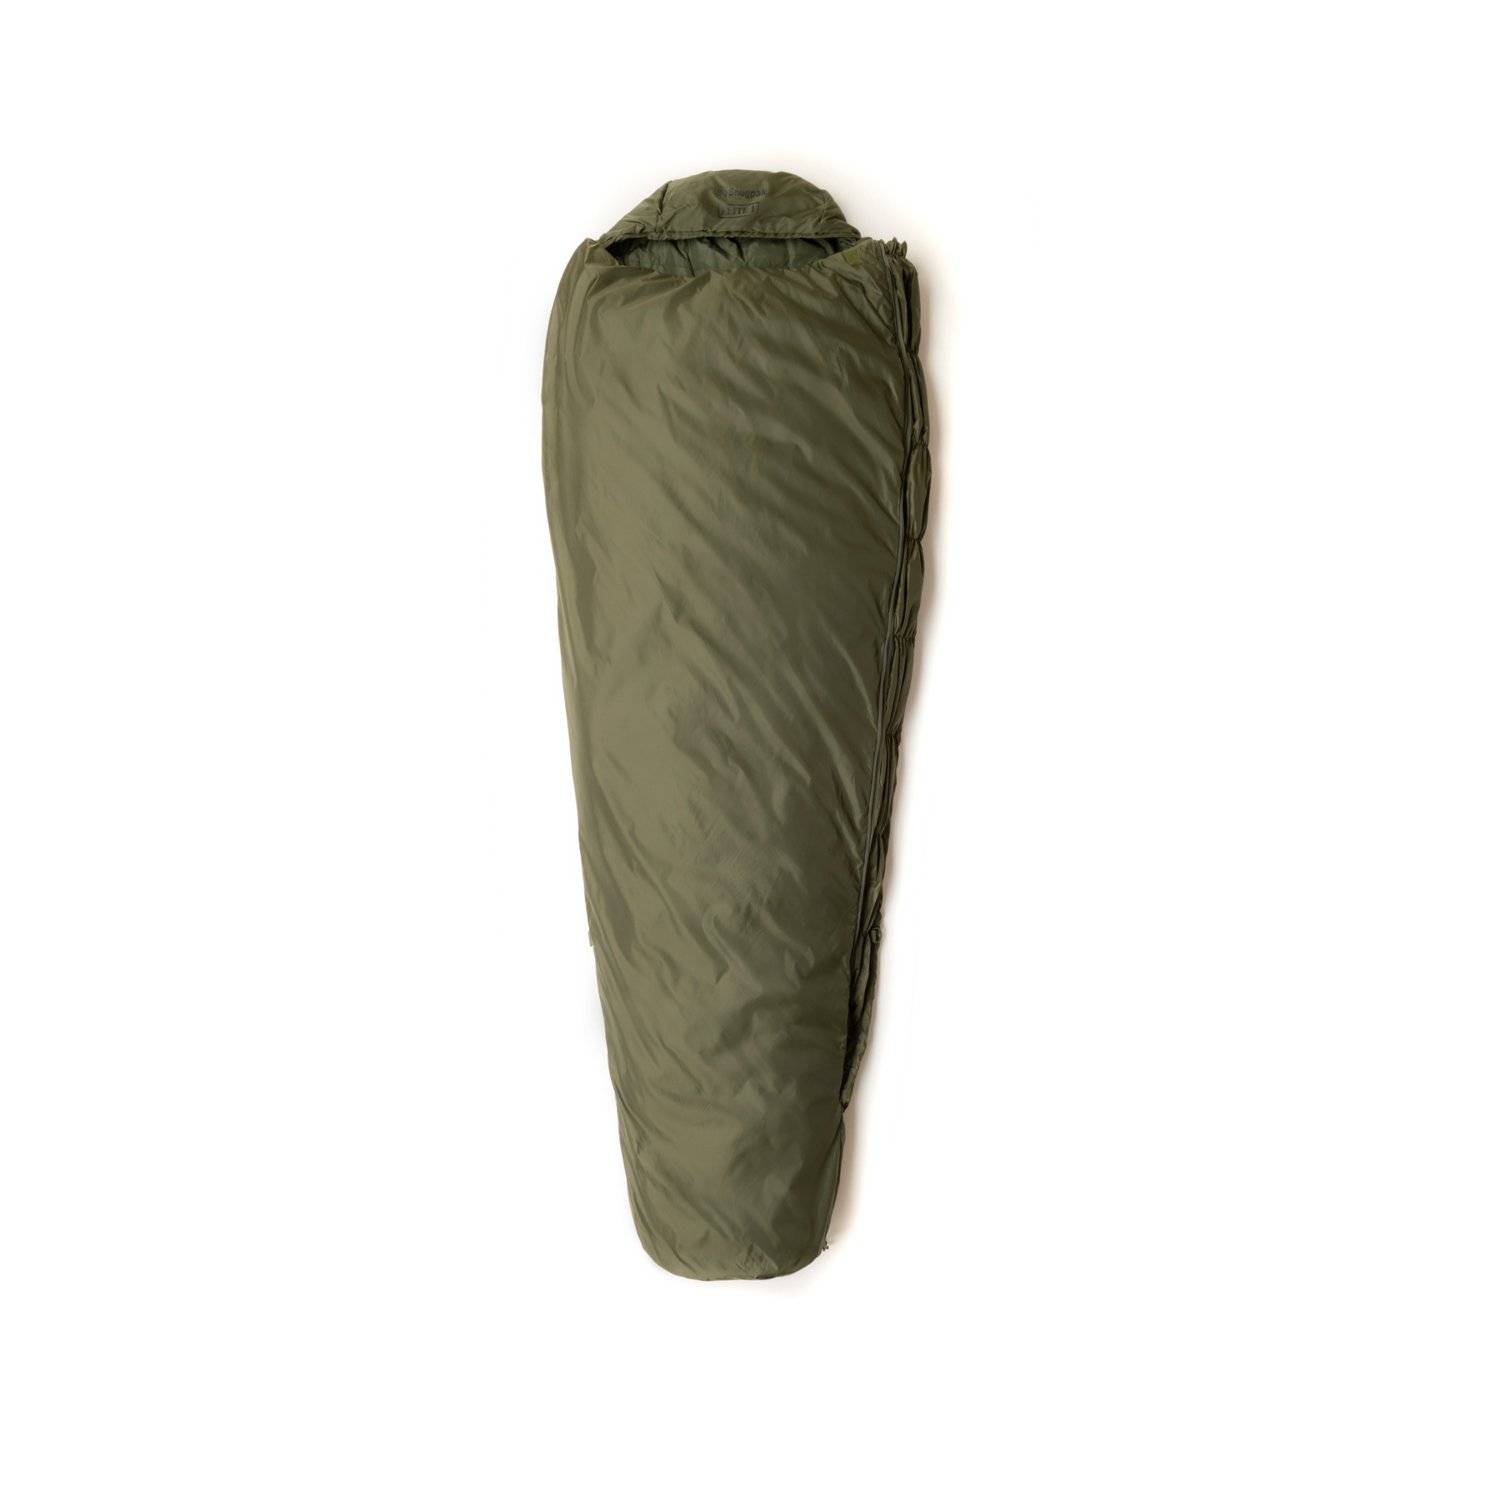 Snugpak Softie Elite 1 Sleeping bag Military Fishing Outdoor Activities Camping 